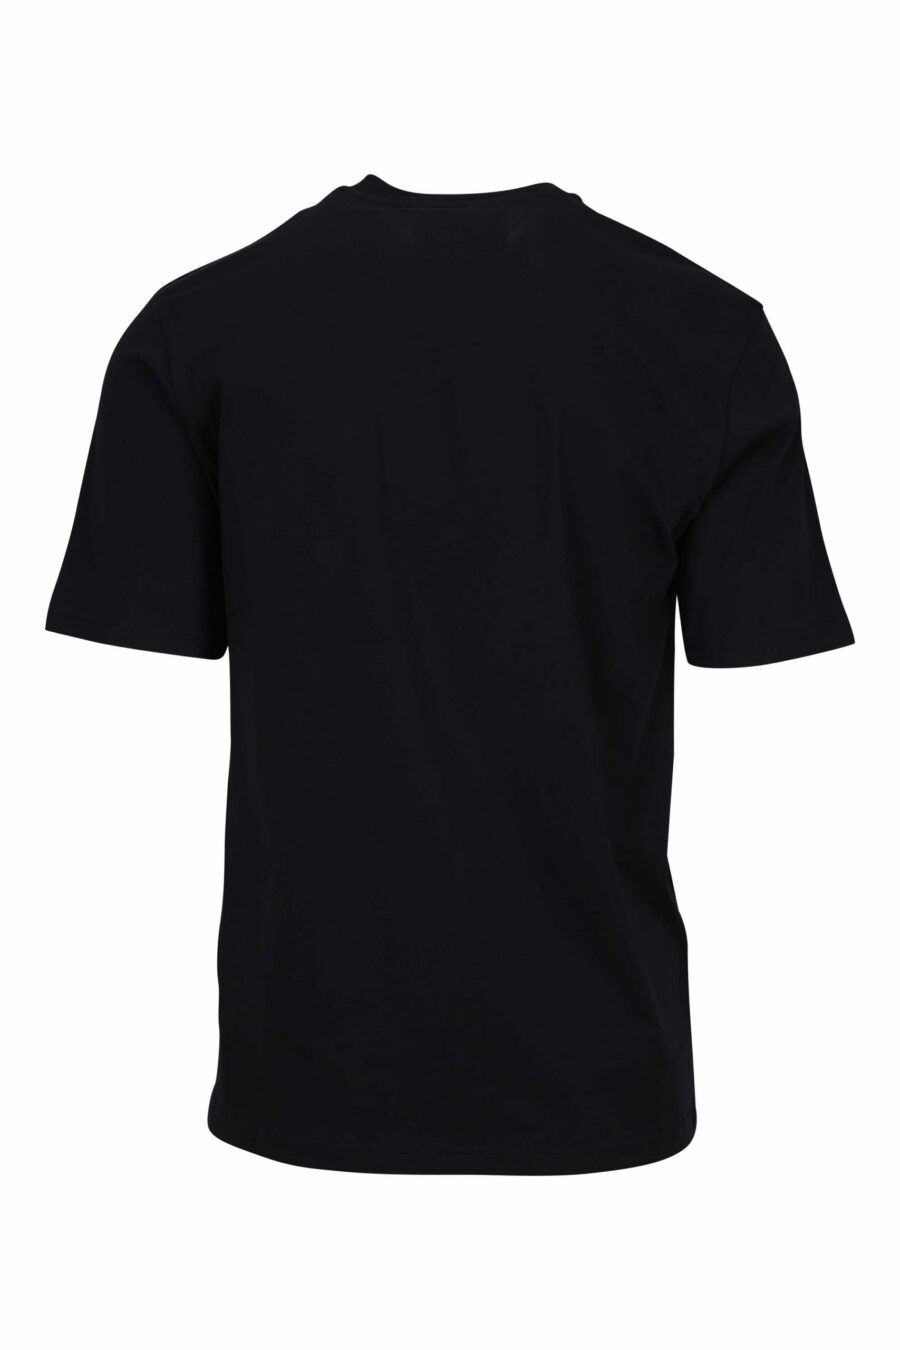 Black T-shirt with bear mini-logo drawing - 667113767819 1 scaled